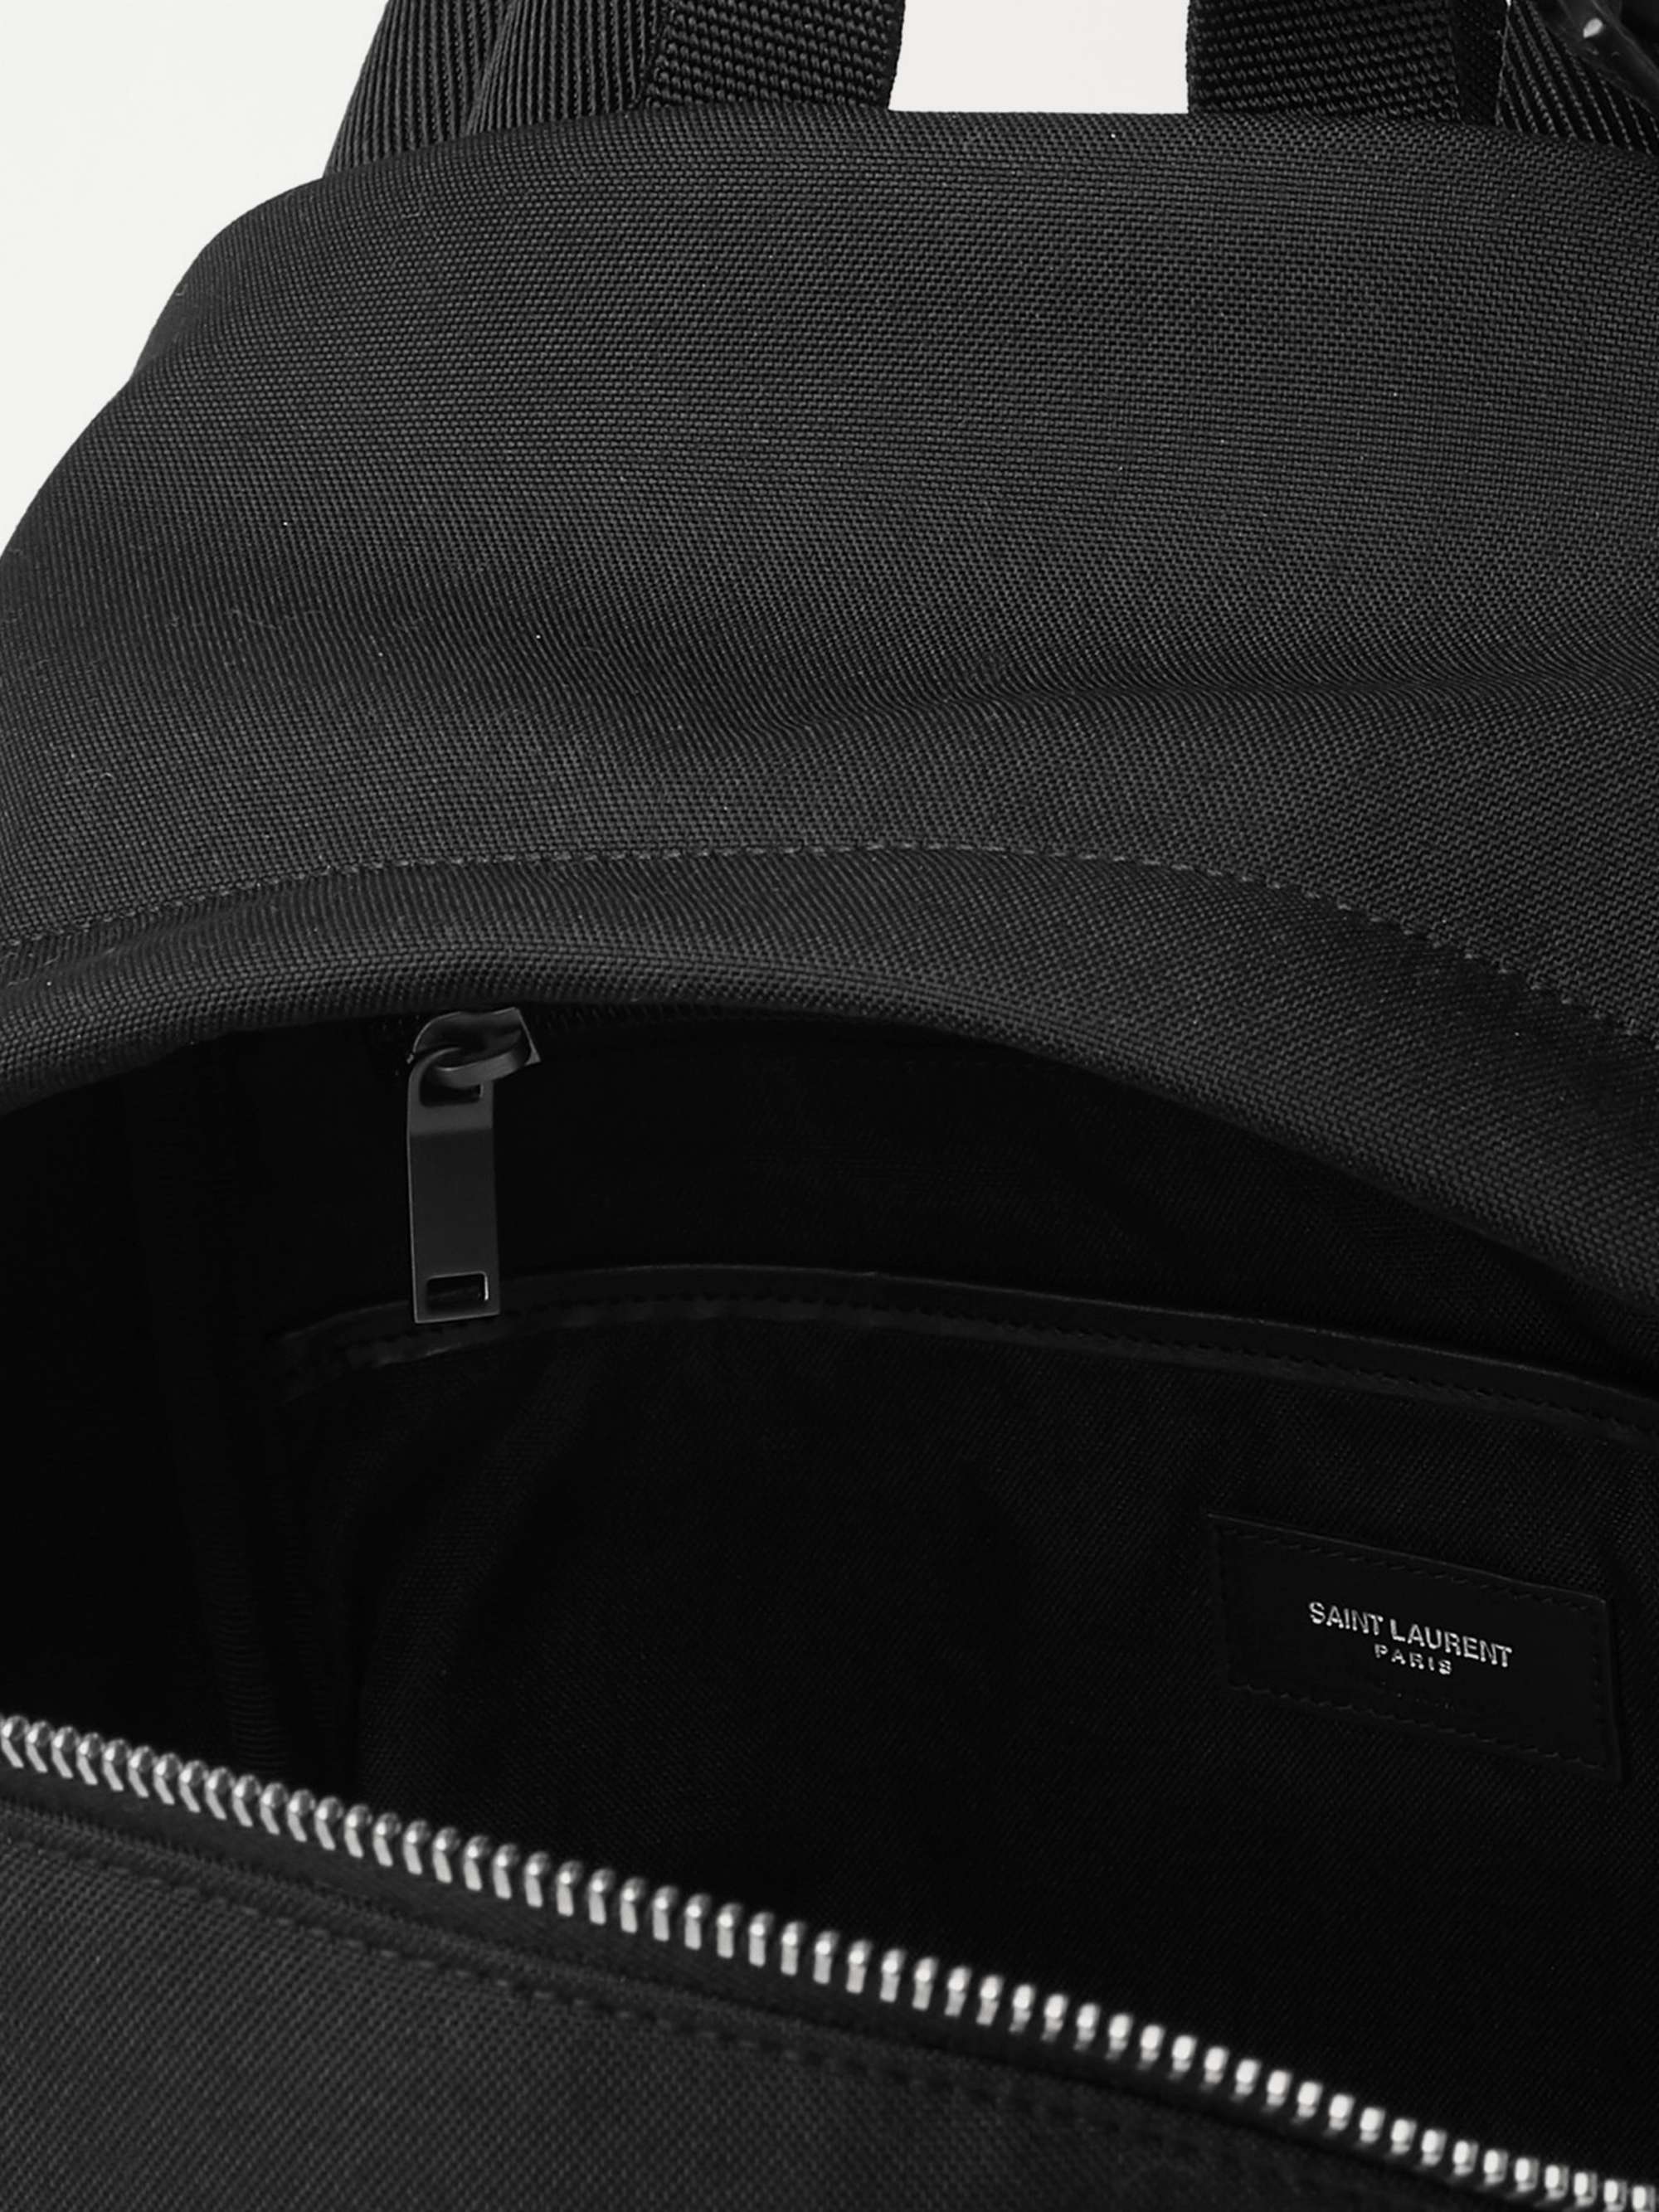 SAINT LAURENT Leather-Trimmed Canvas Backpack